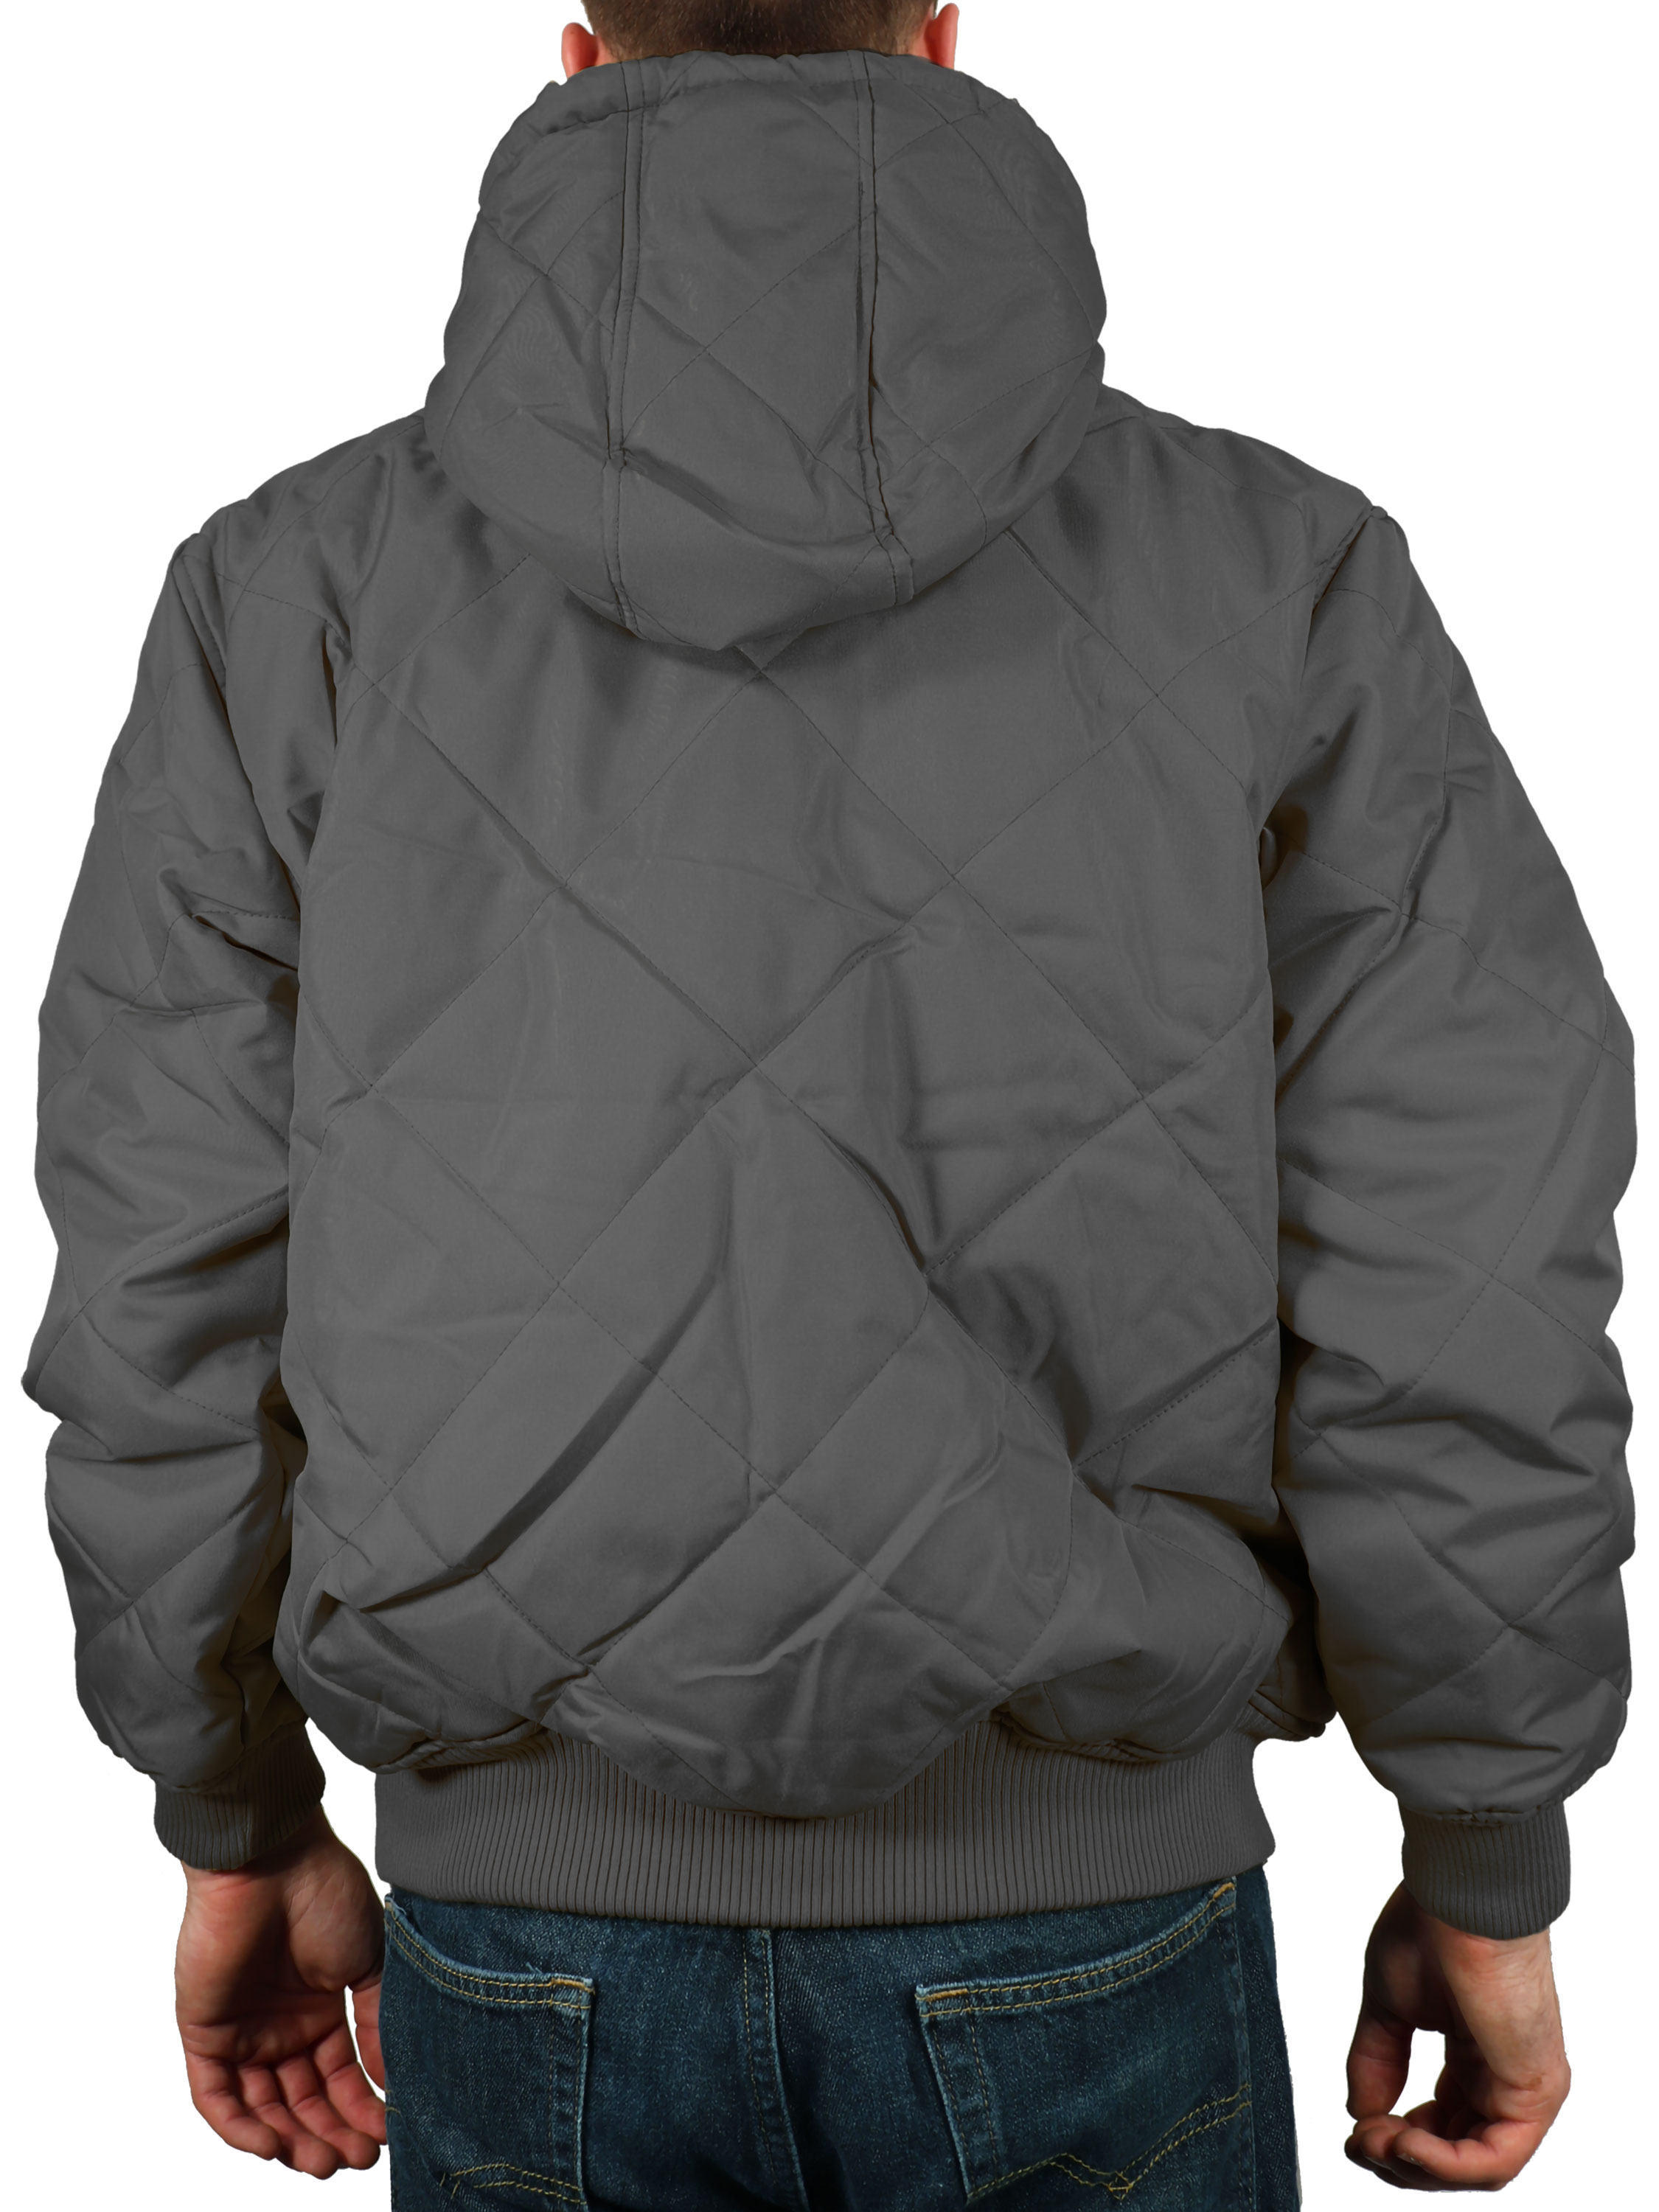 WAWAYA Men Hooded Warm Winter Camo Print Plus Size Down Quilted Jacket Coat Outerwear 